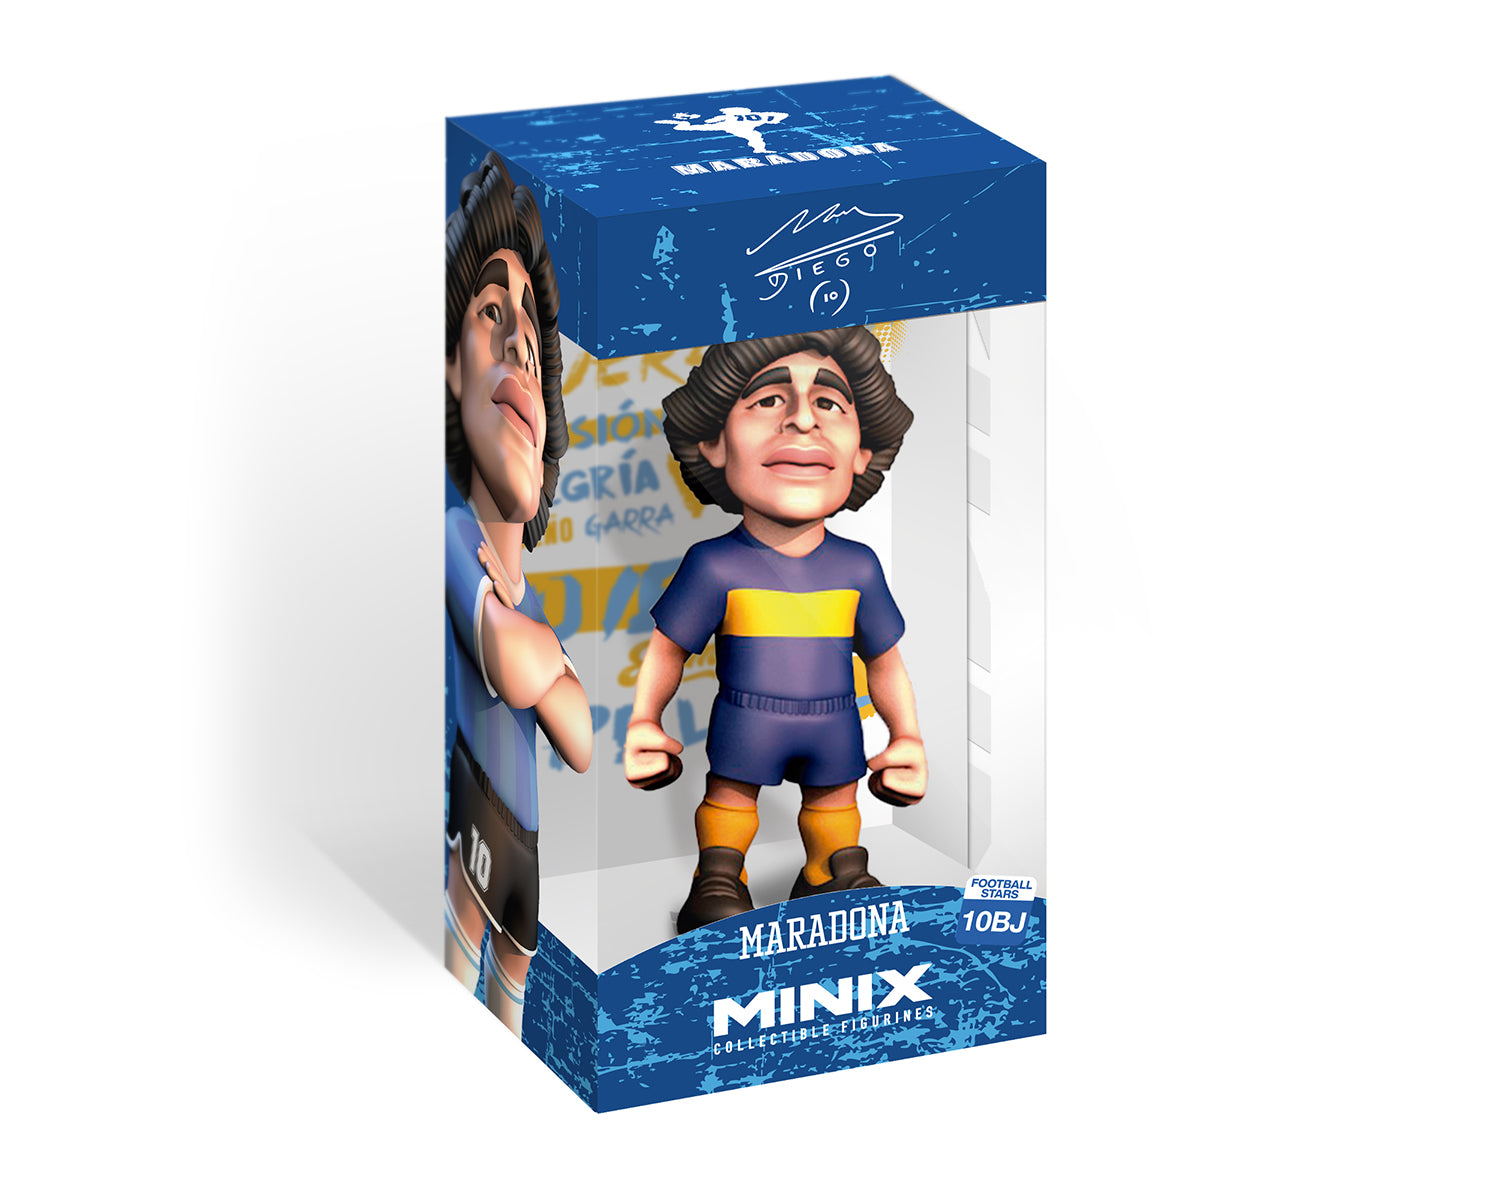 Minix -Football -MARADONA -BLUE AND YELLOW -Figurine -12 cm